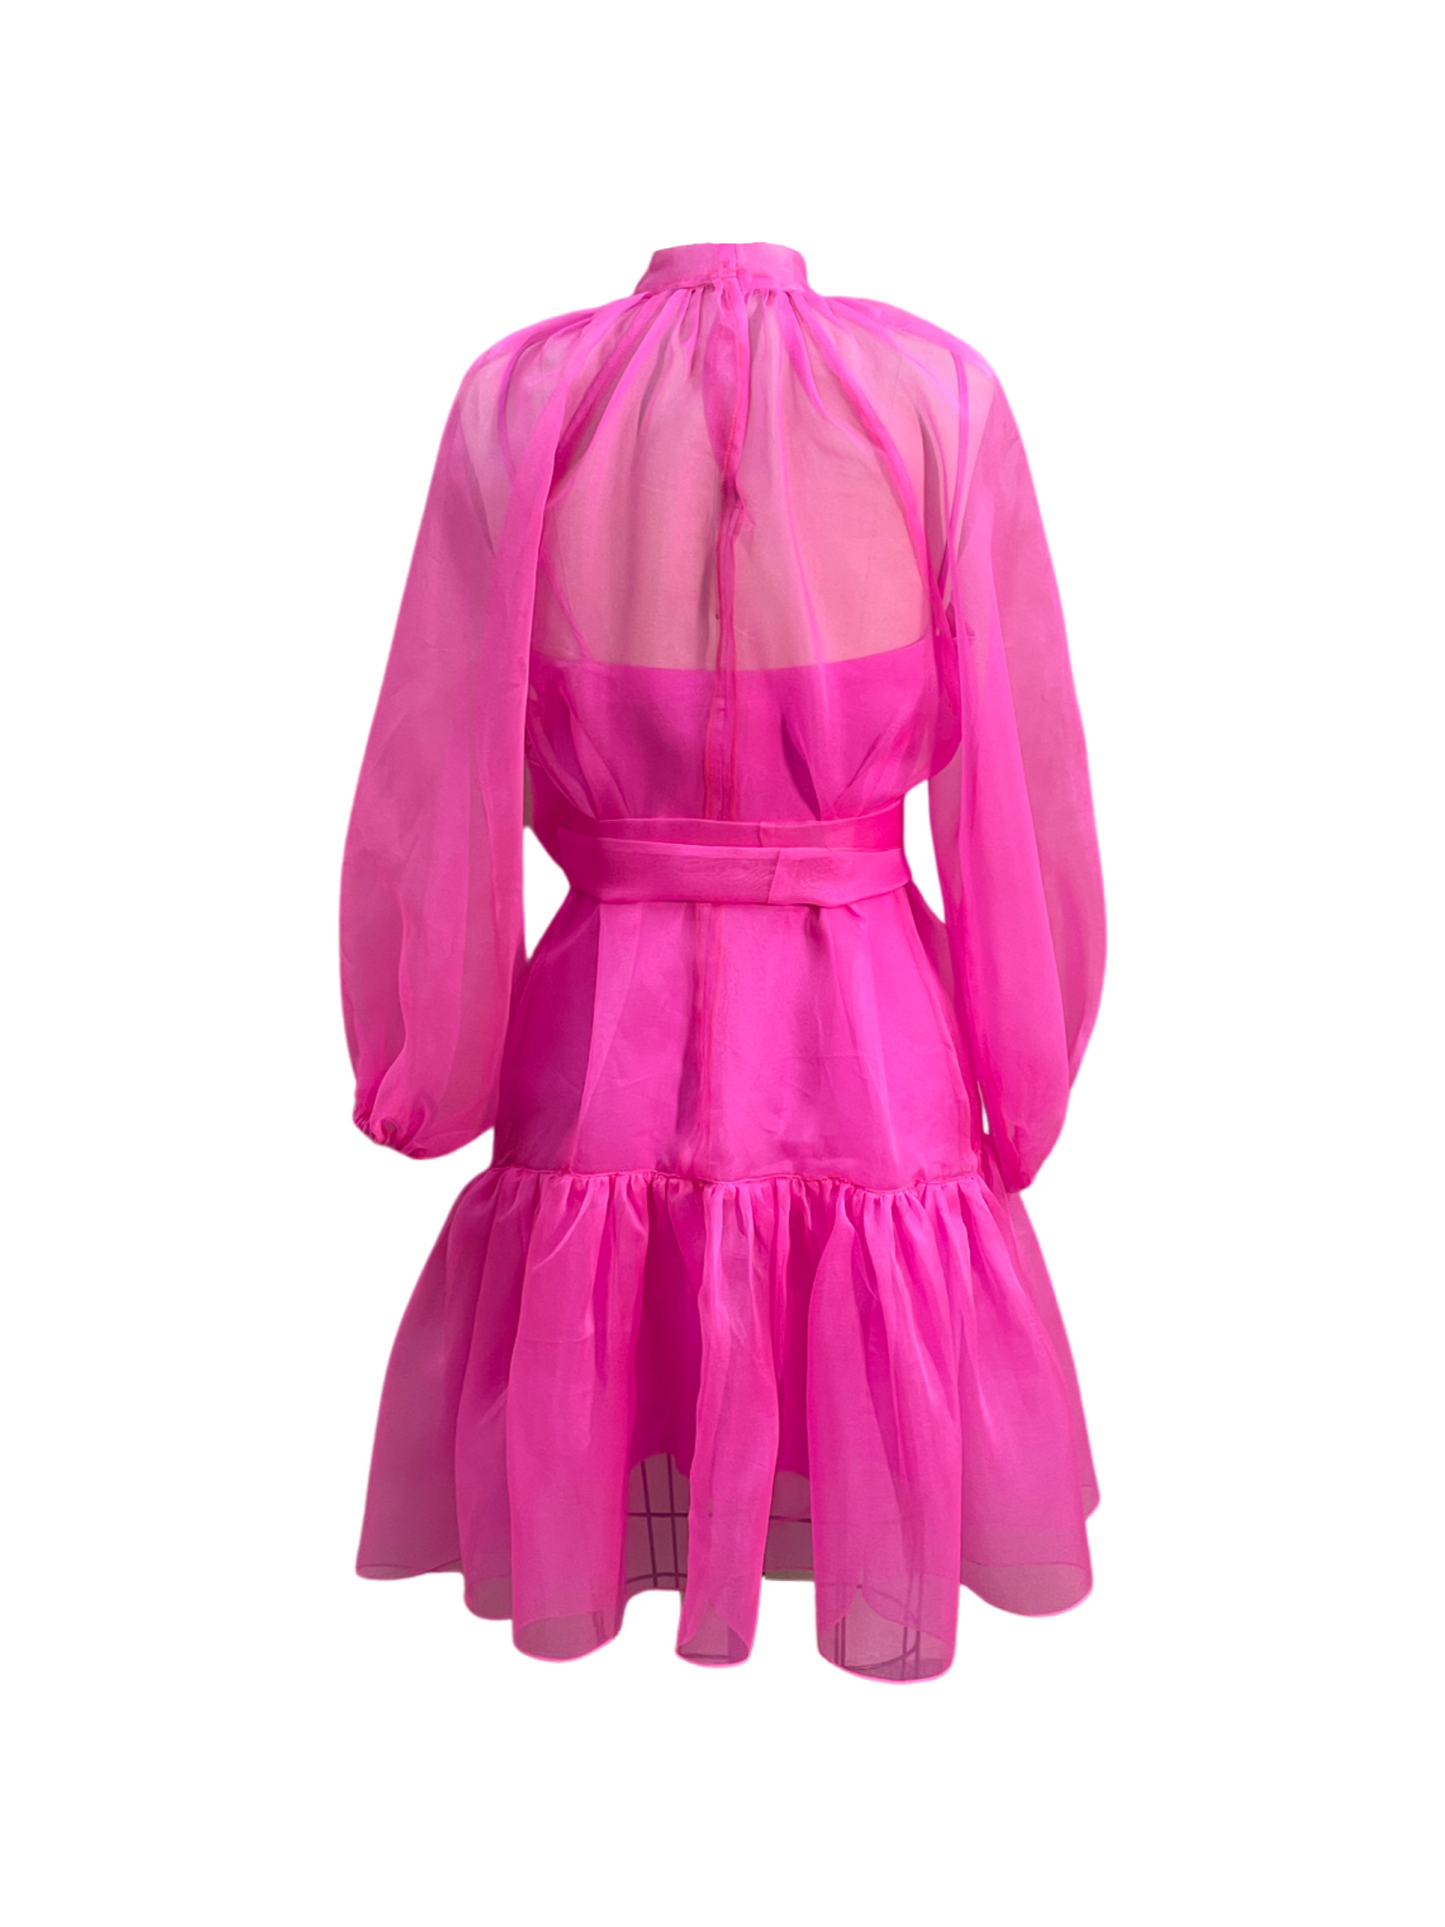 Hot Pink Mini Puffy Party Dress